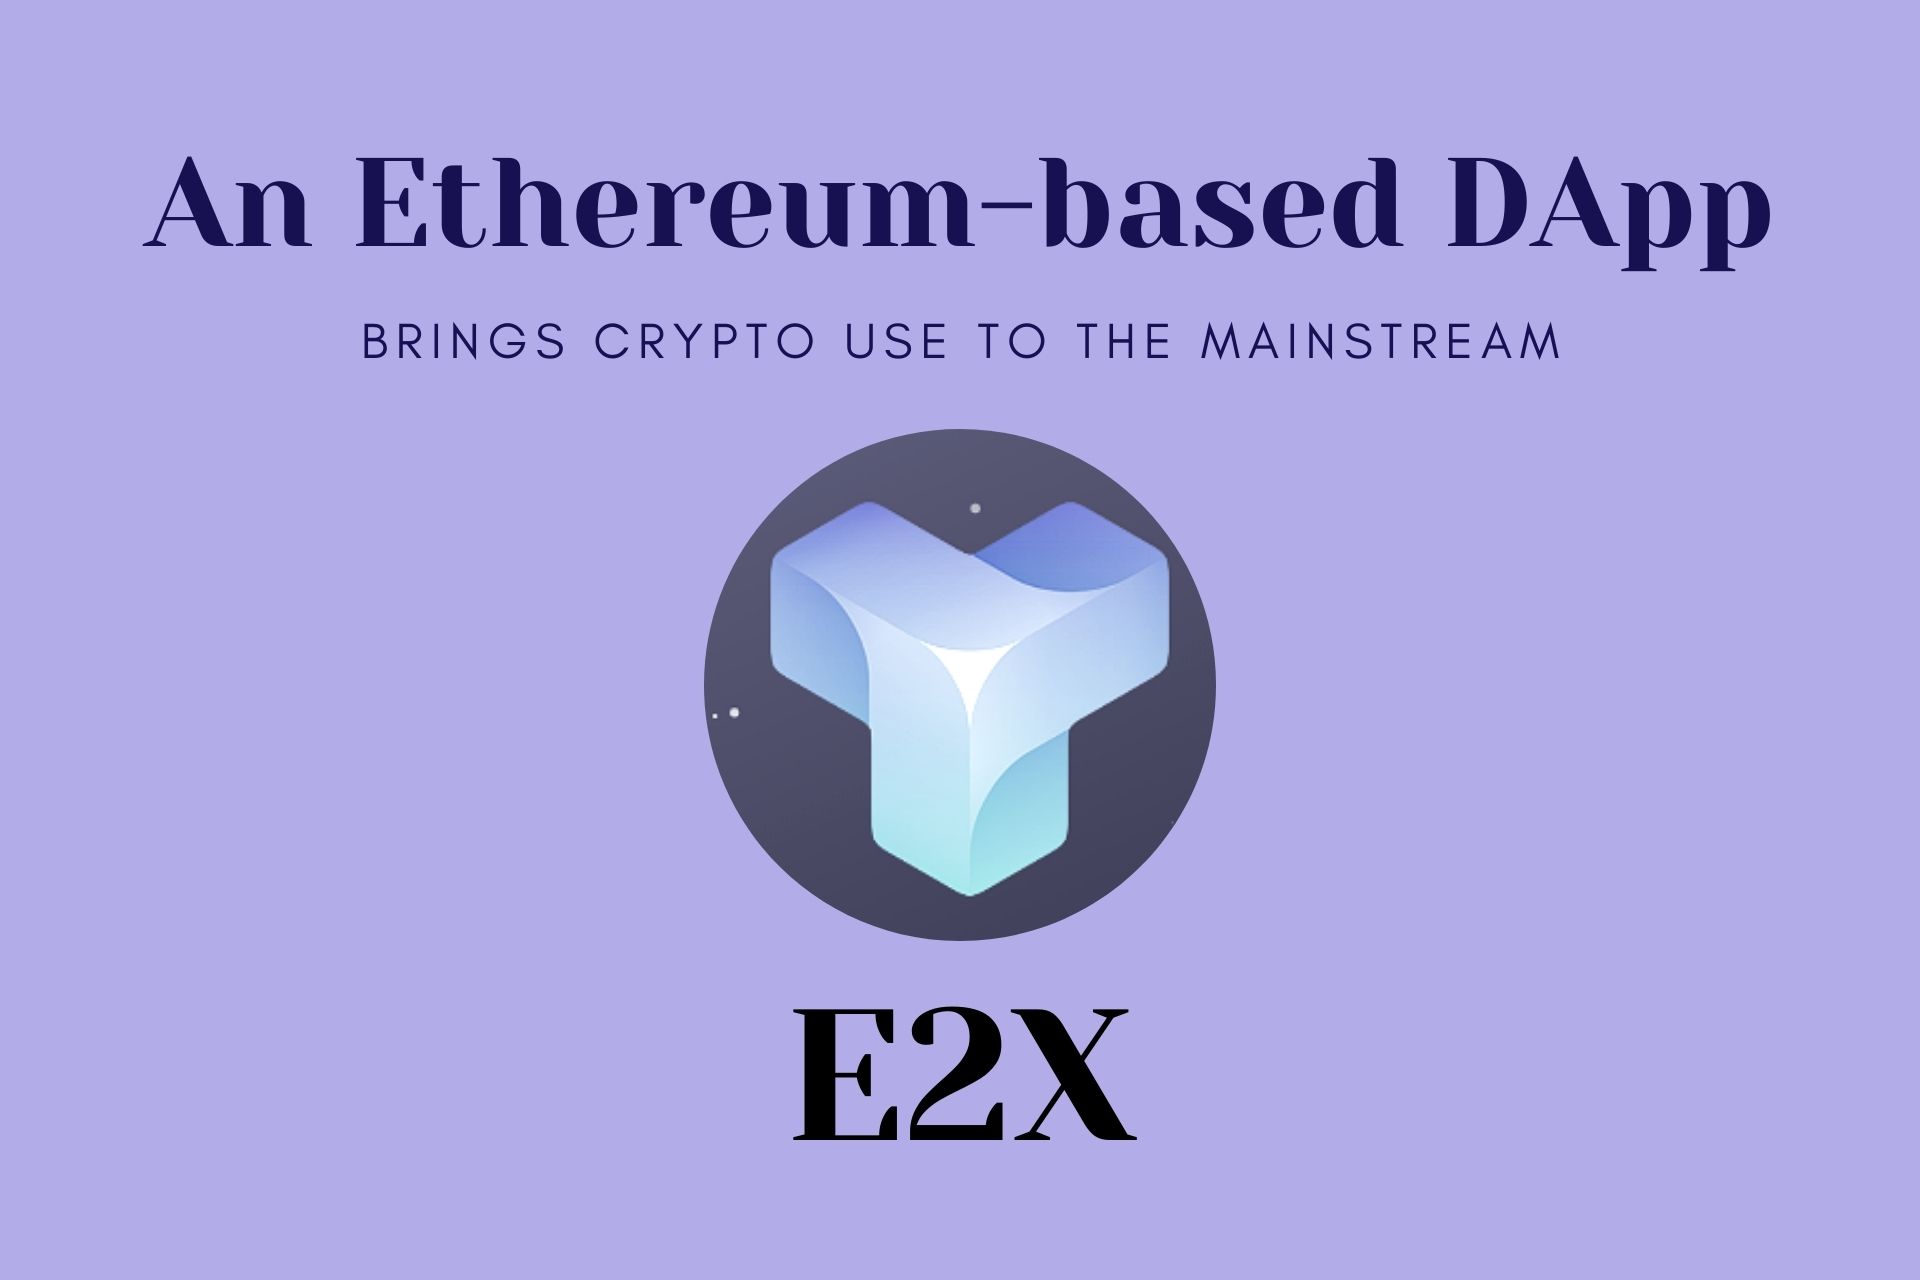 E2X Dapps platform